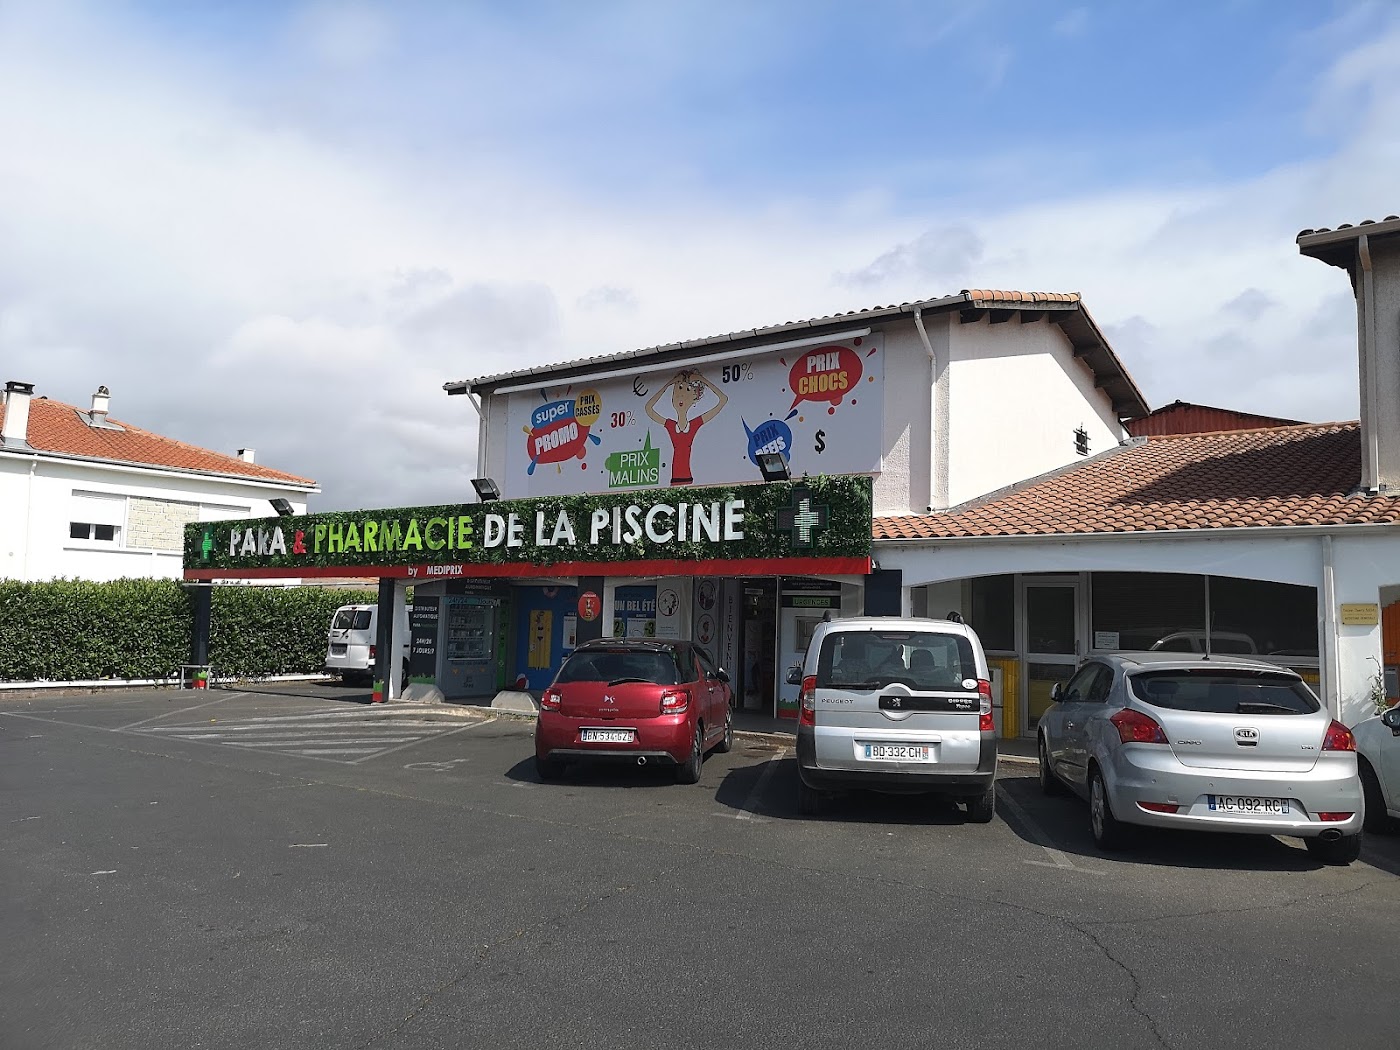 Pharmacie de la Piscine by Médiprix